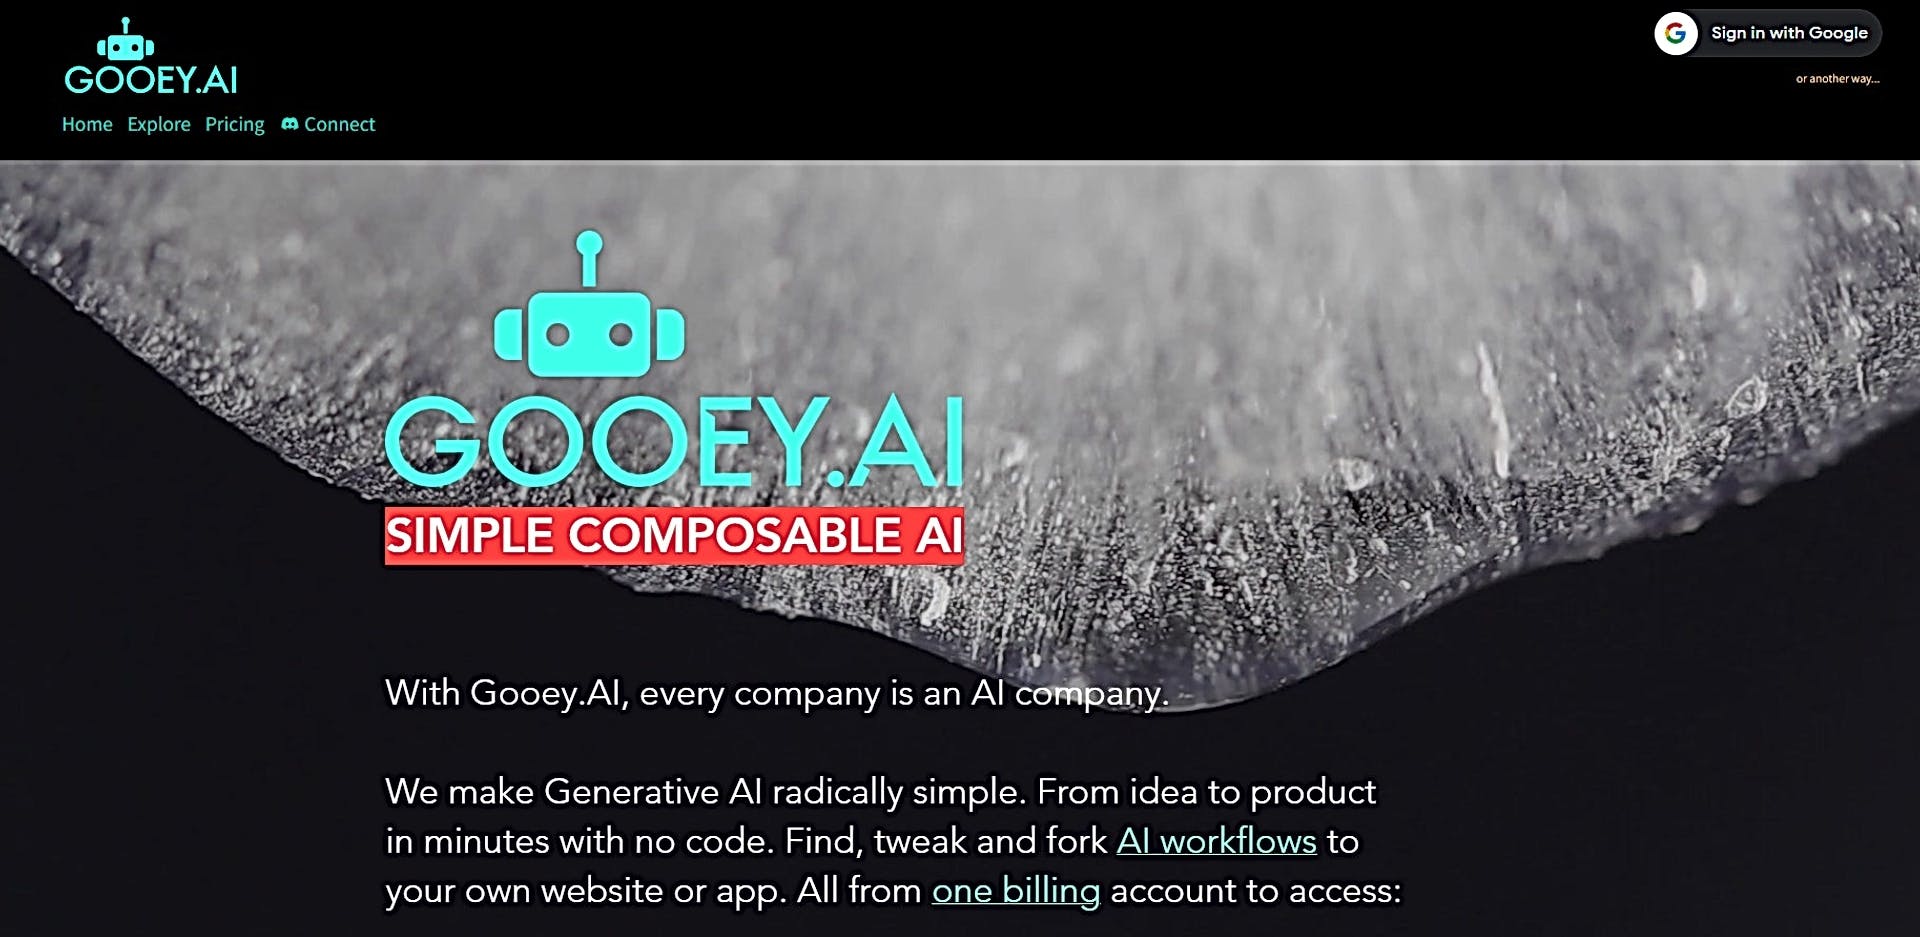 Gooey.AI featured